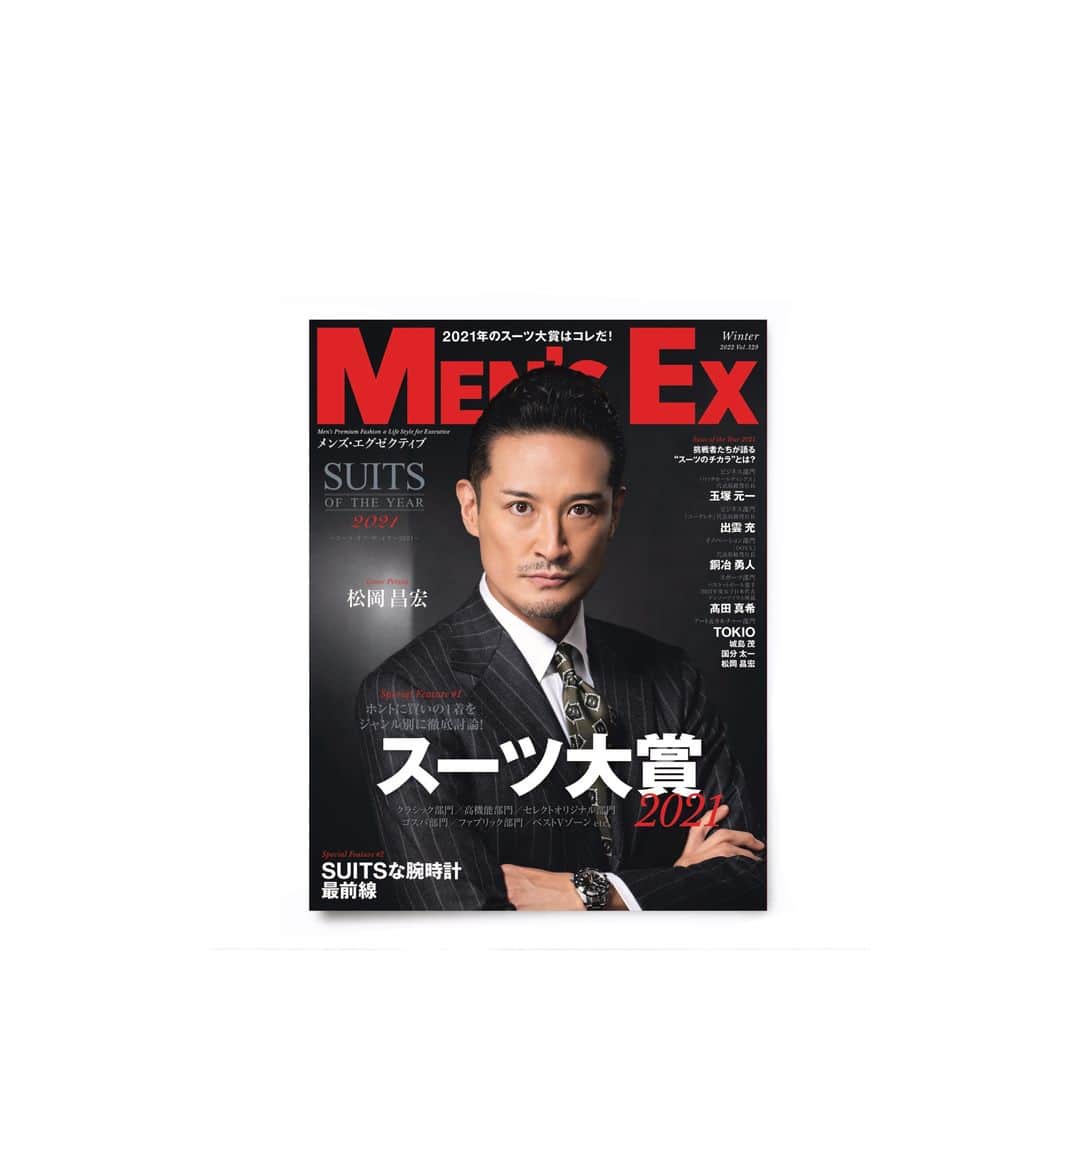 MEN'S EX 男性総合ファッション誌『メンズ・イーエックス』公式アカウントのインスタグラム